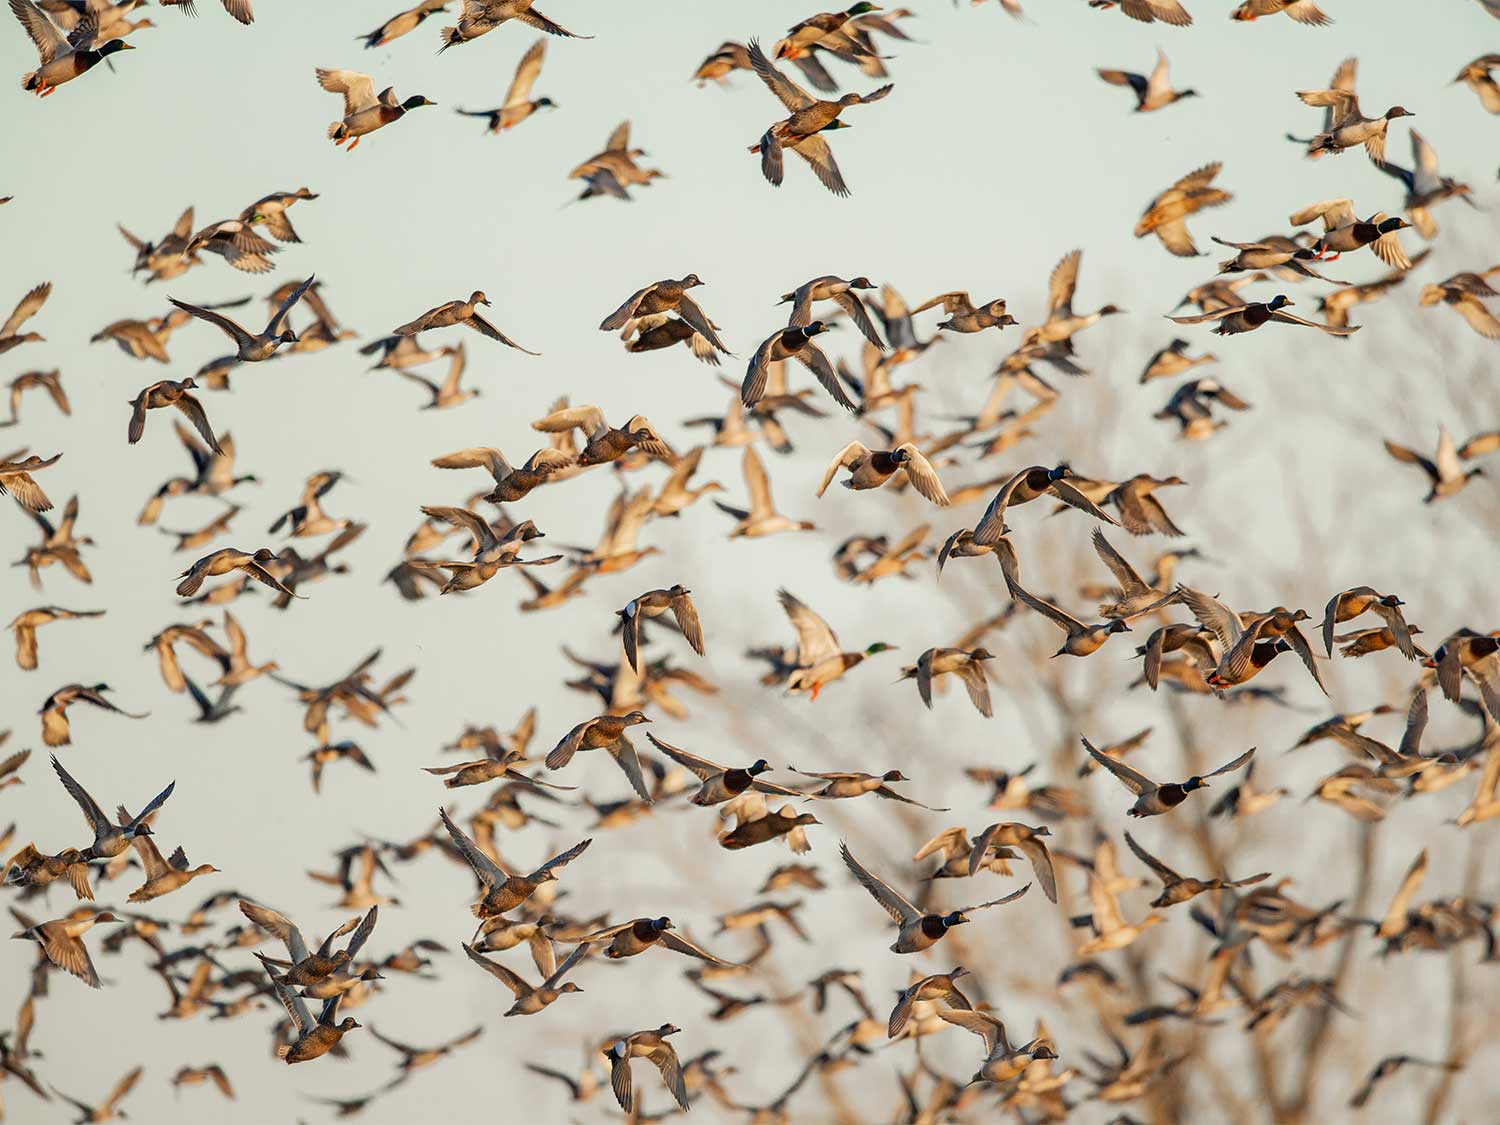 A flock of ducks in flight over a marsh.